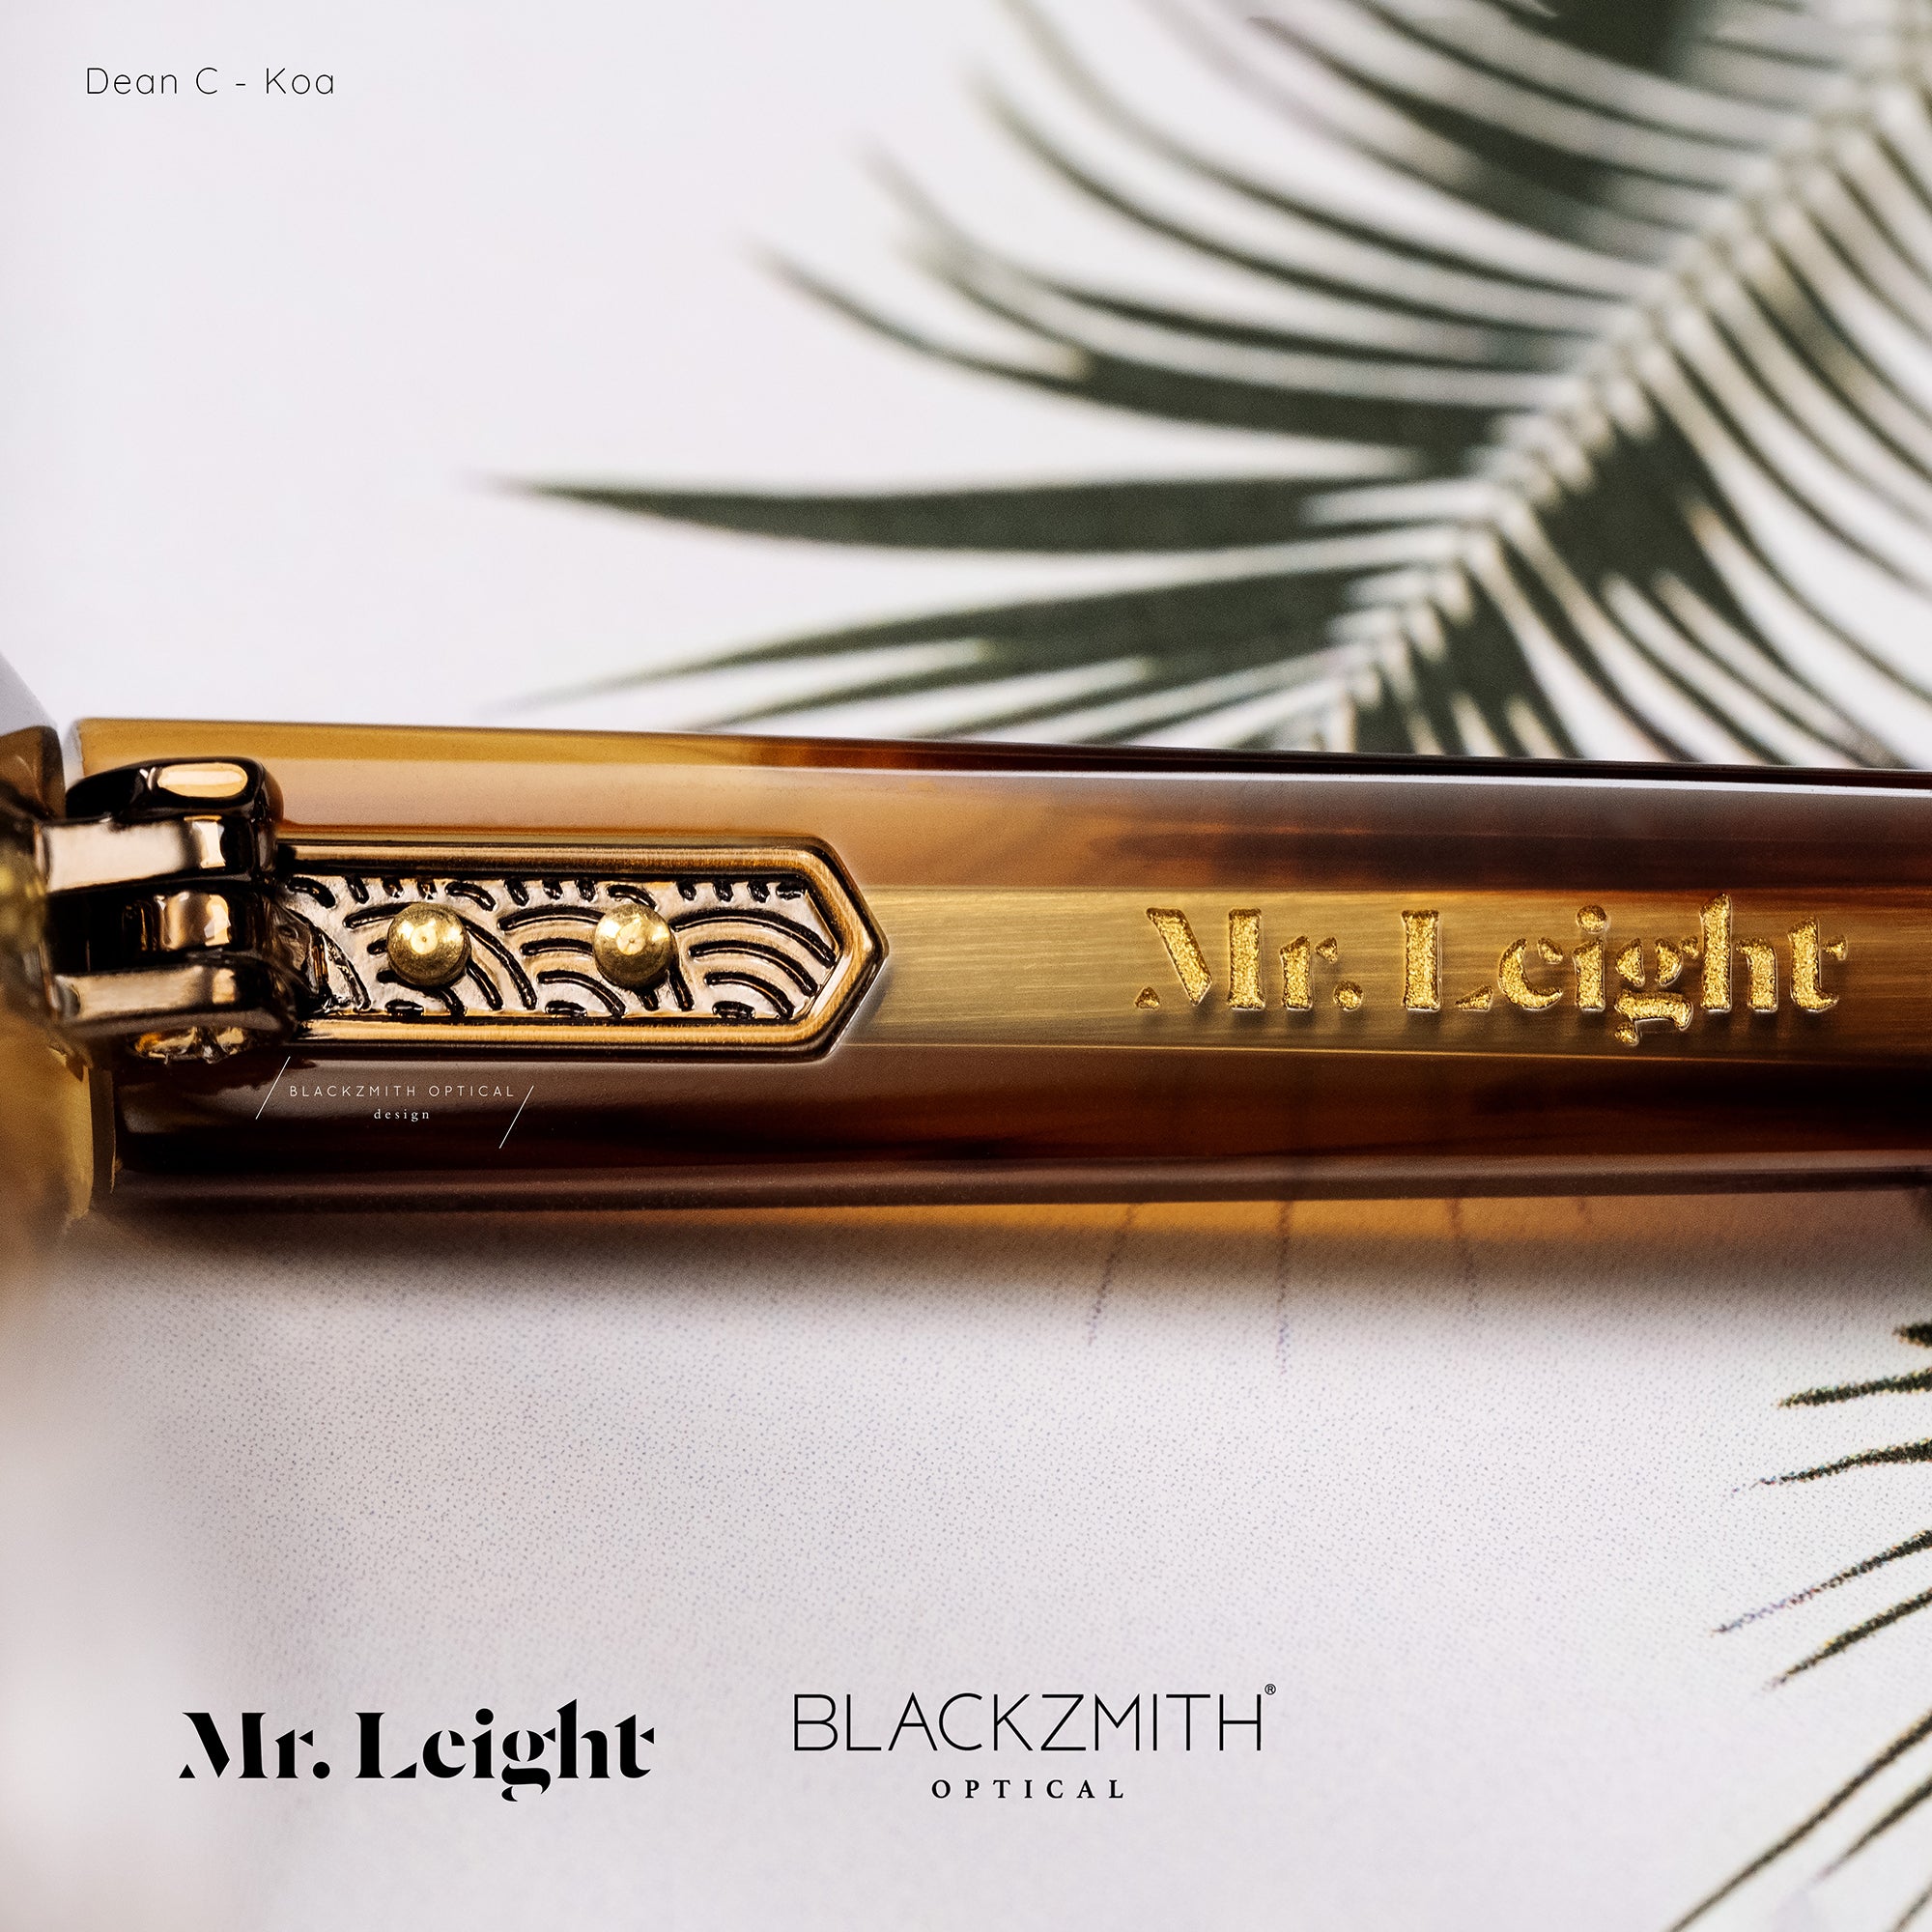 Mr. Leight - Dean C 44 Koa-Antique Gold【New】